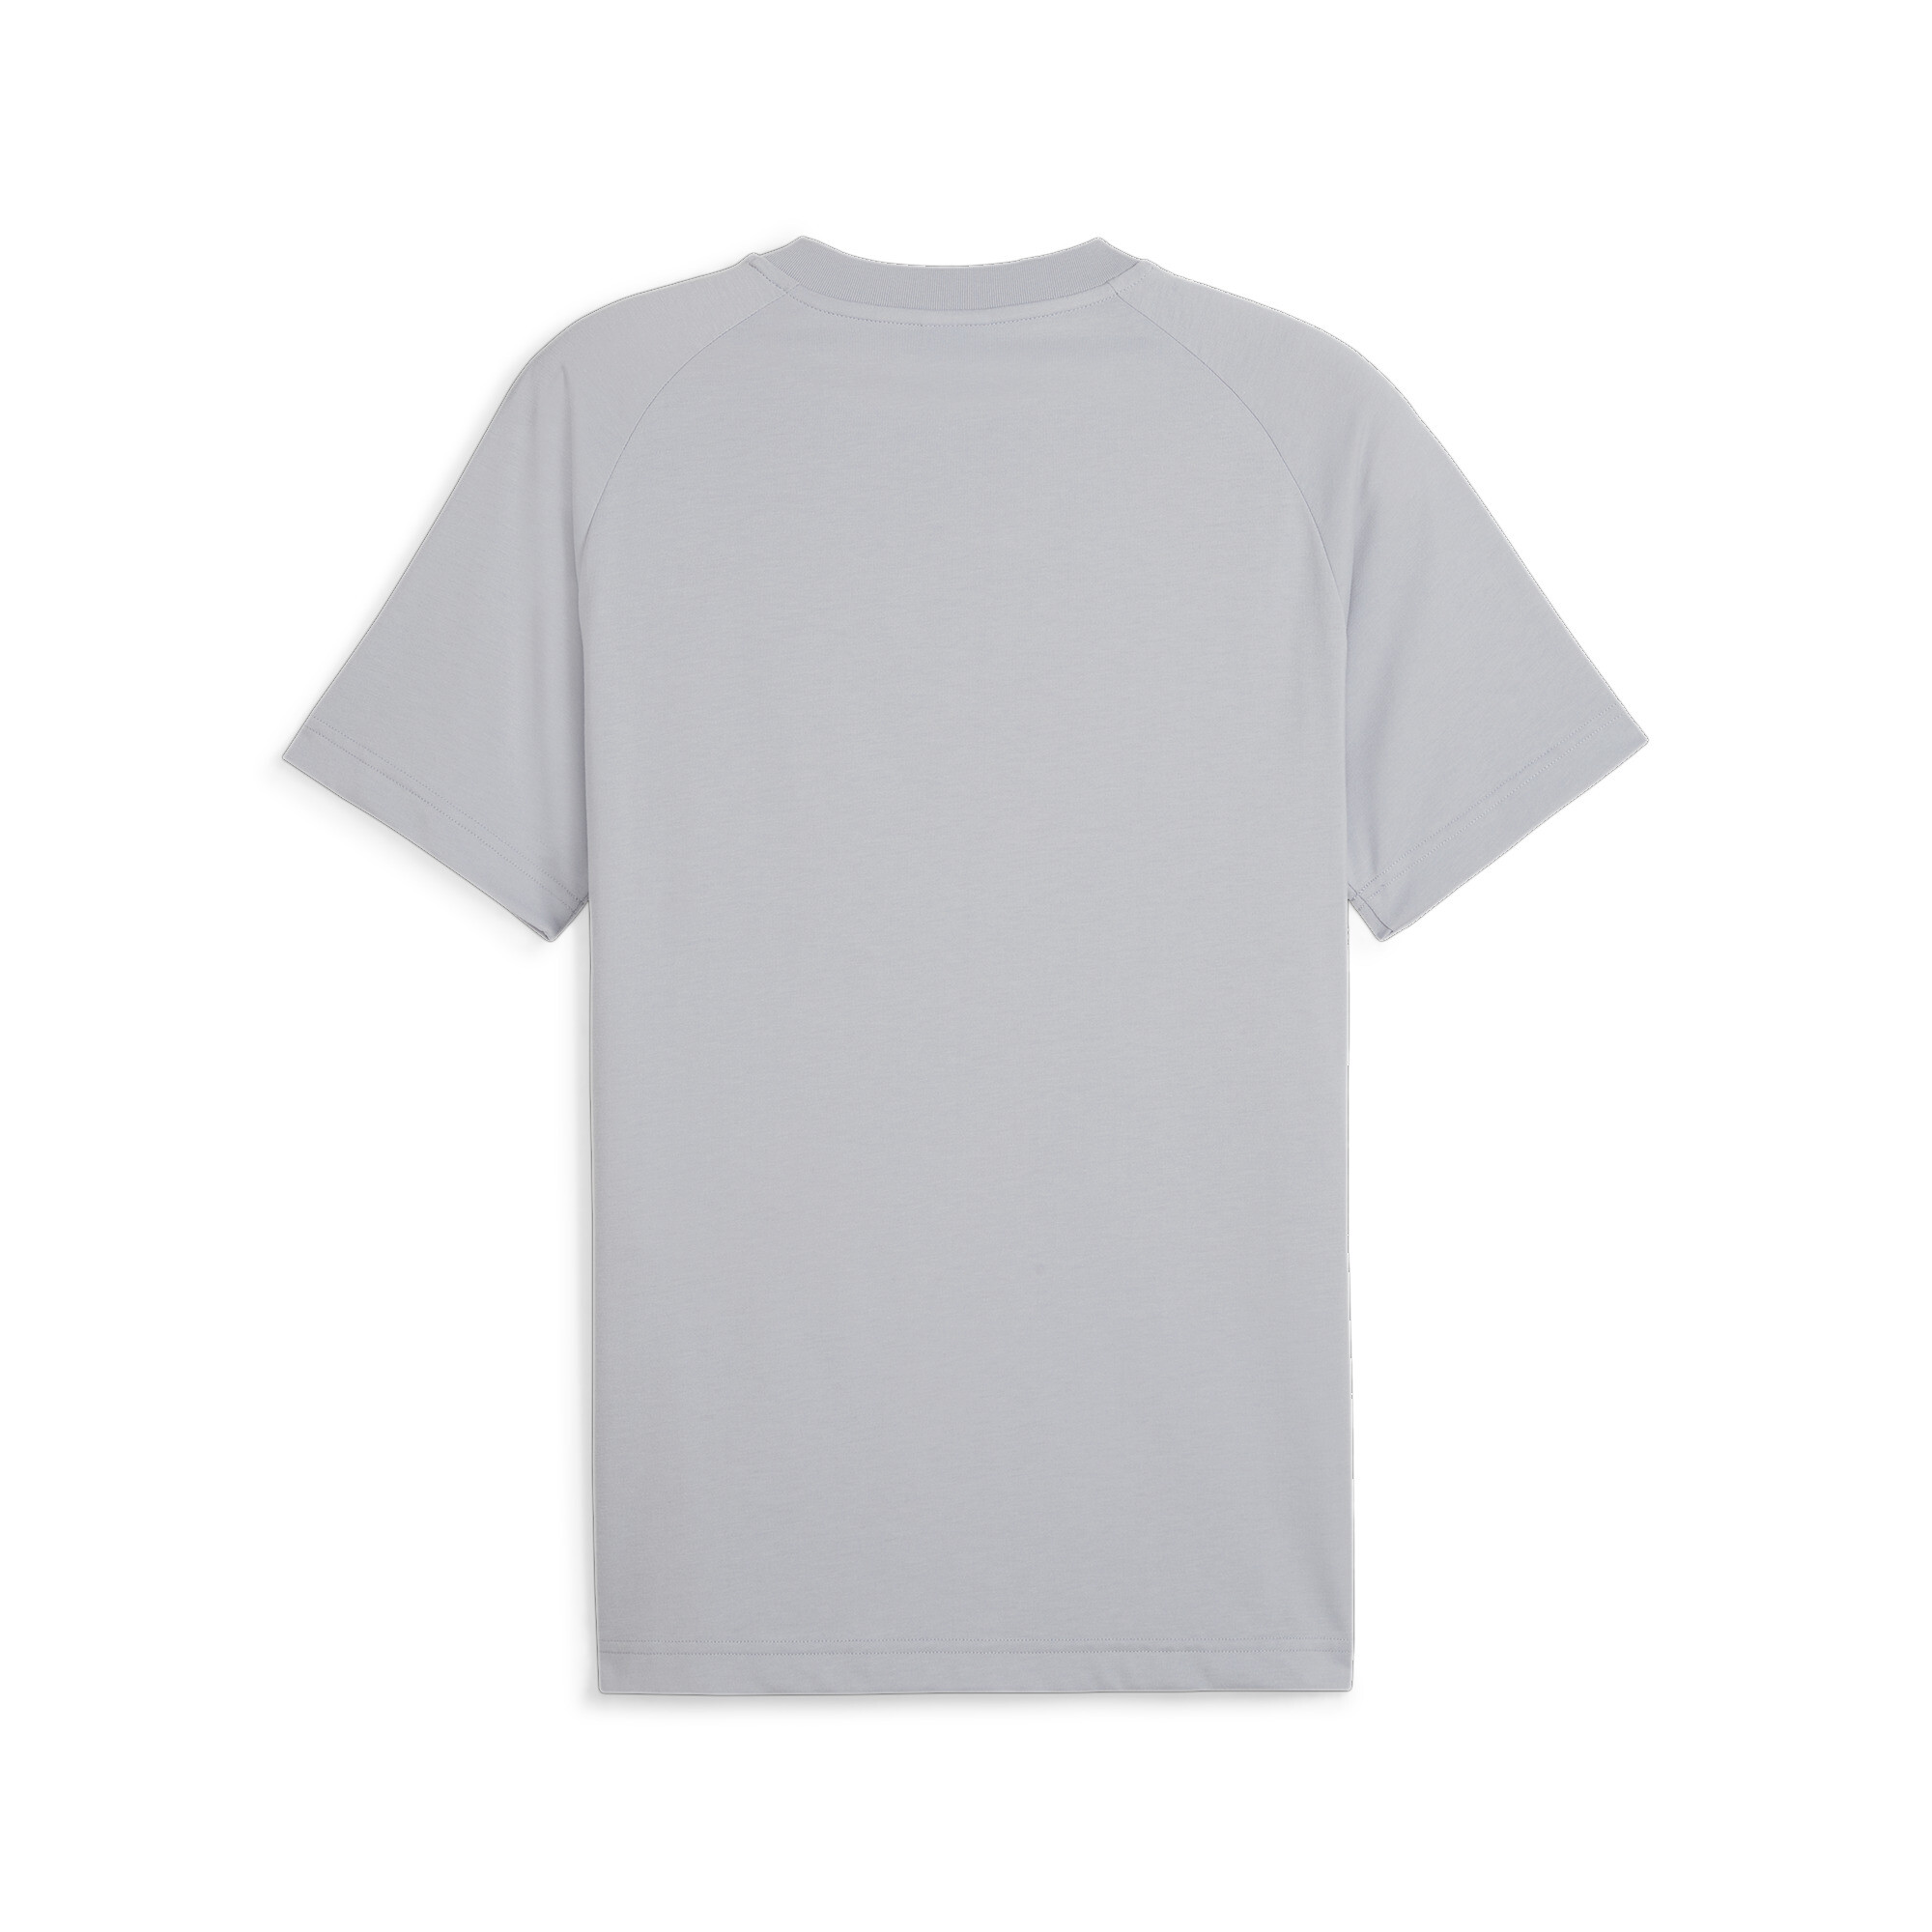 Men's PUMATECH Pocket T-Shirt In Gray, Size XS